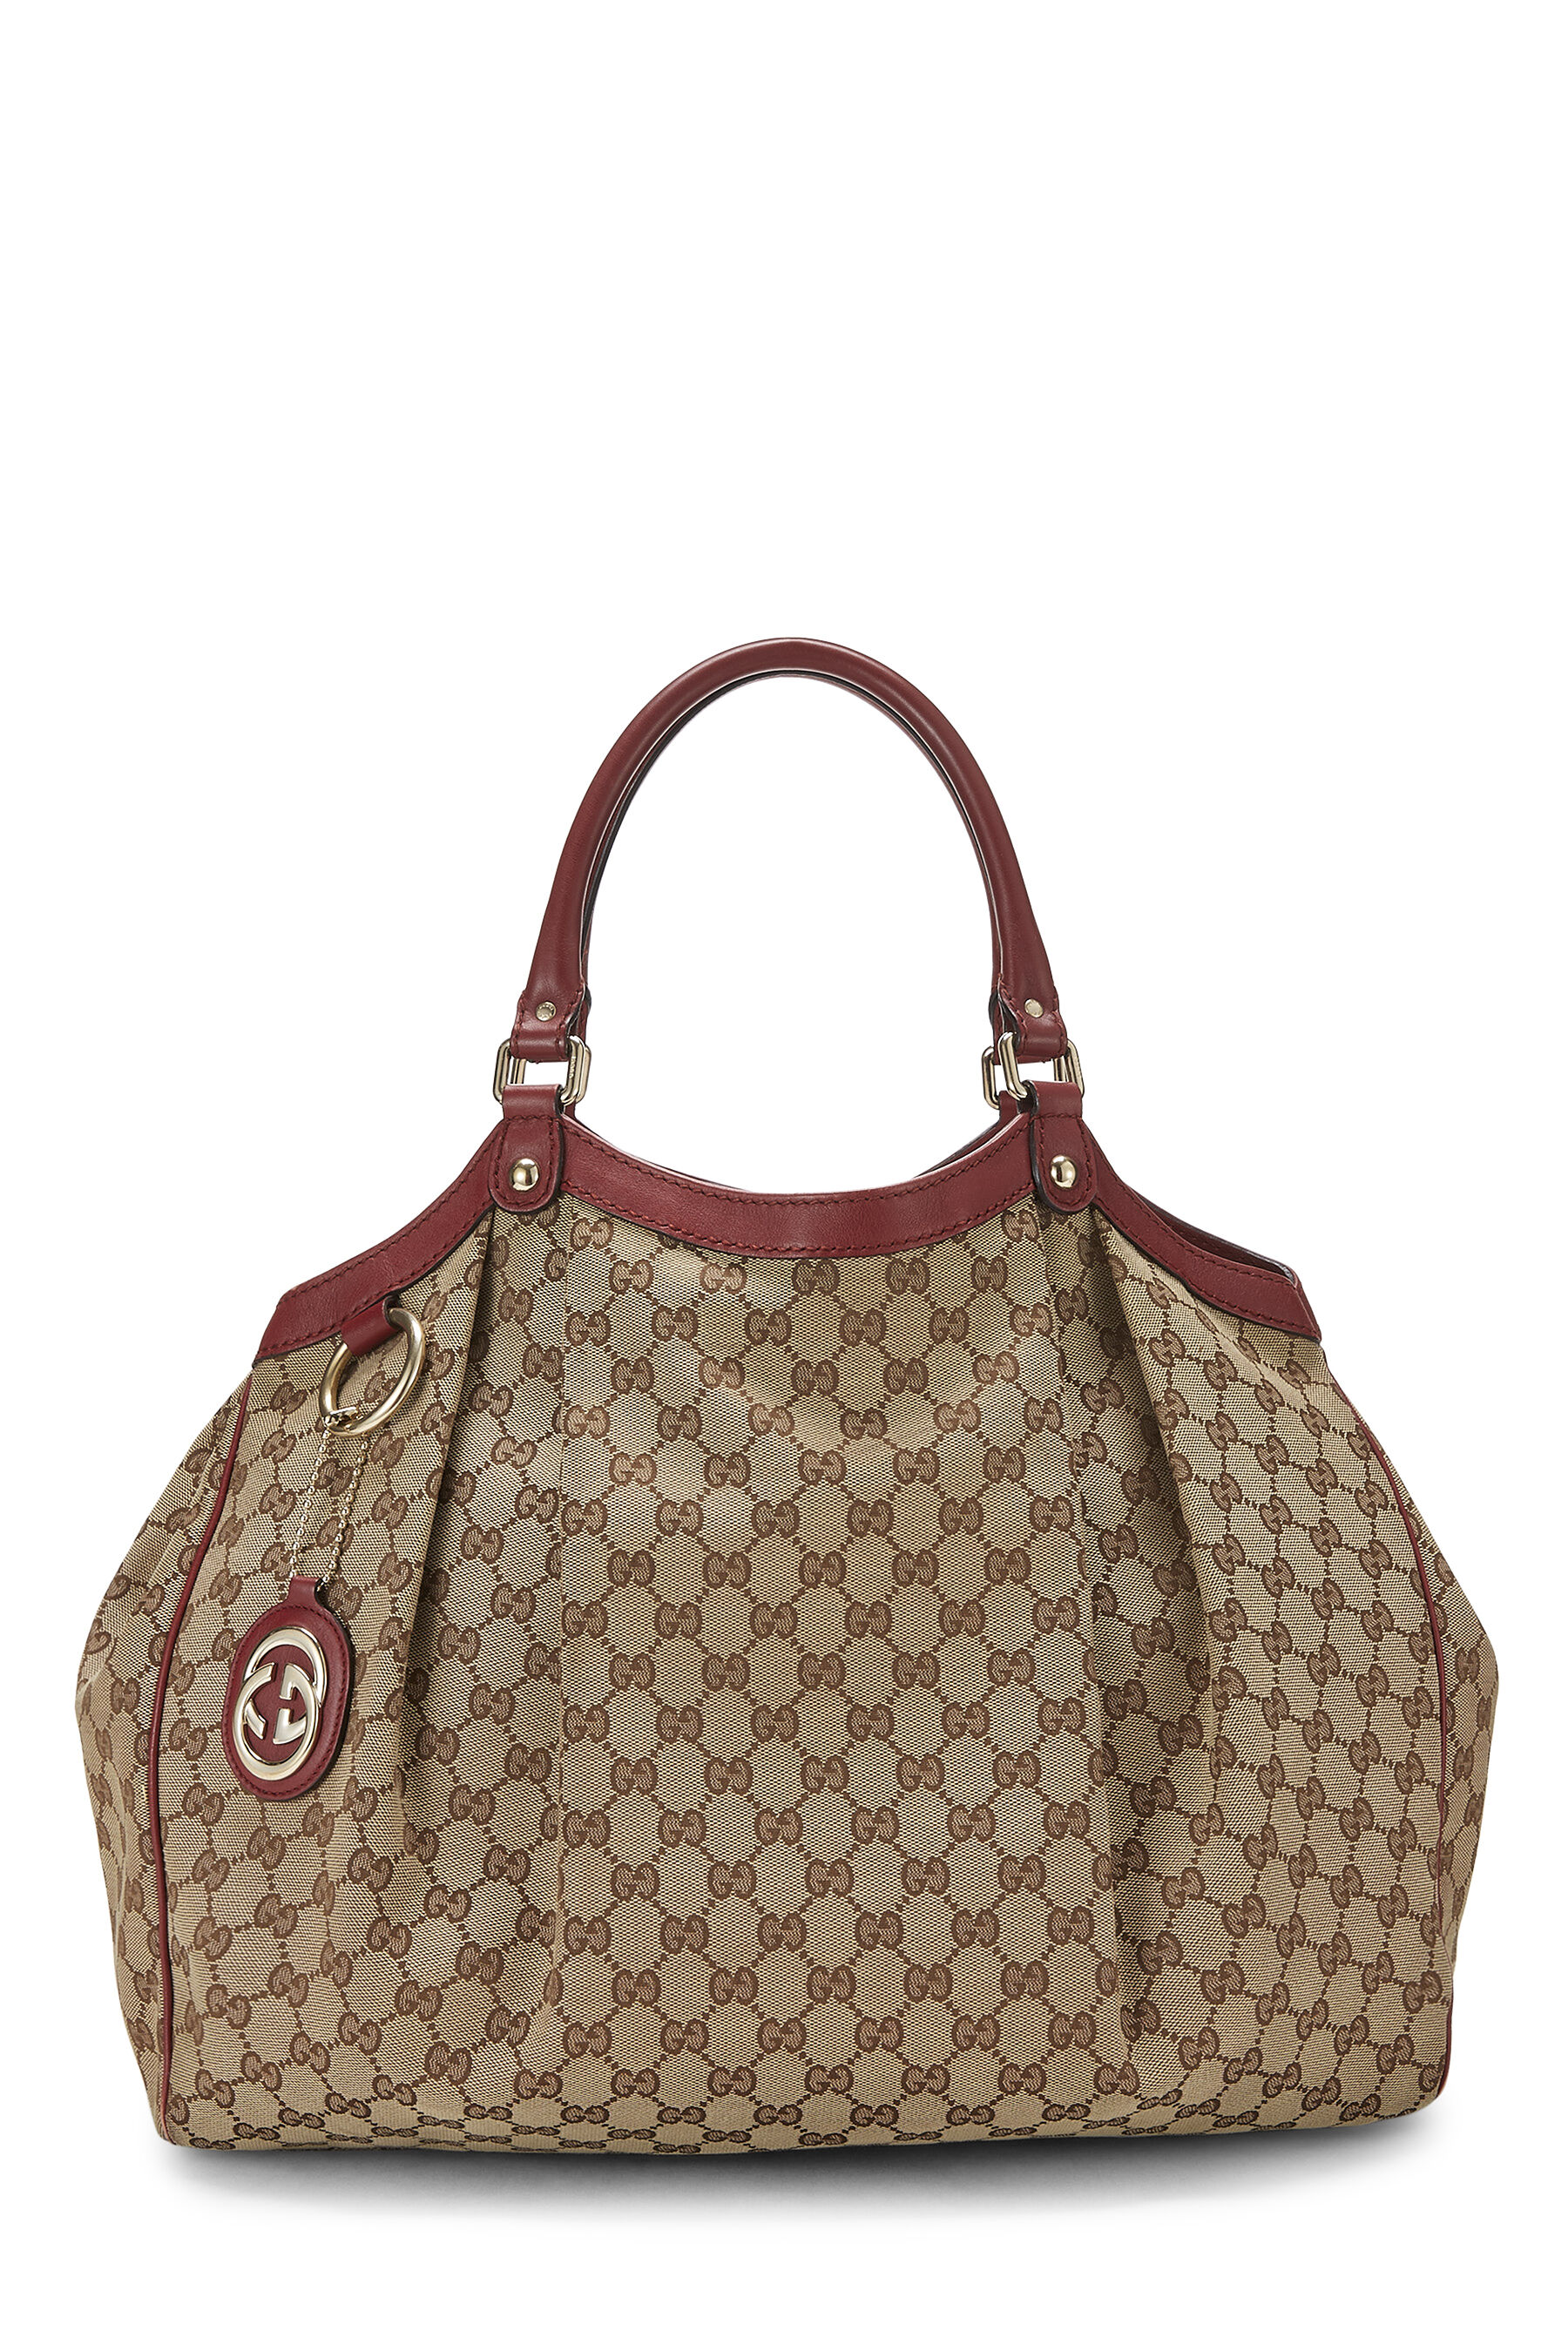 Gucci, Bags, Large Gucci Sukey Tote